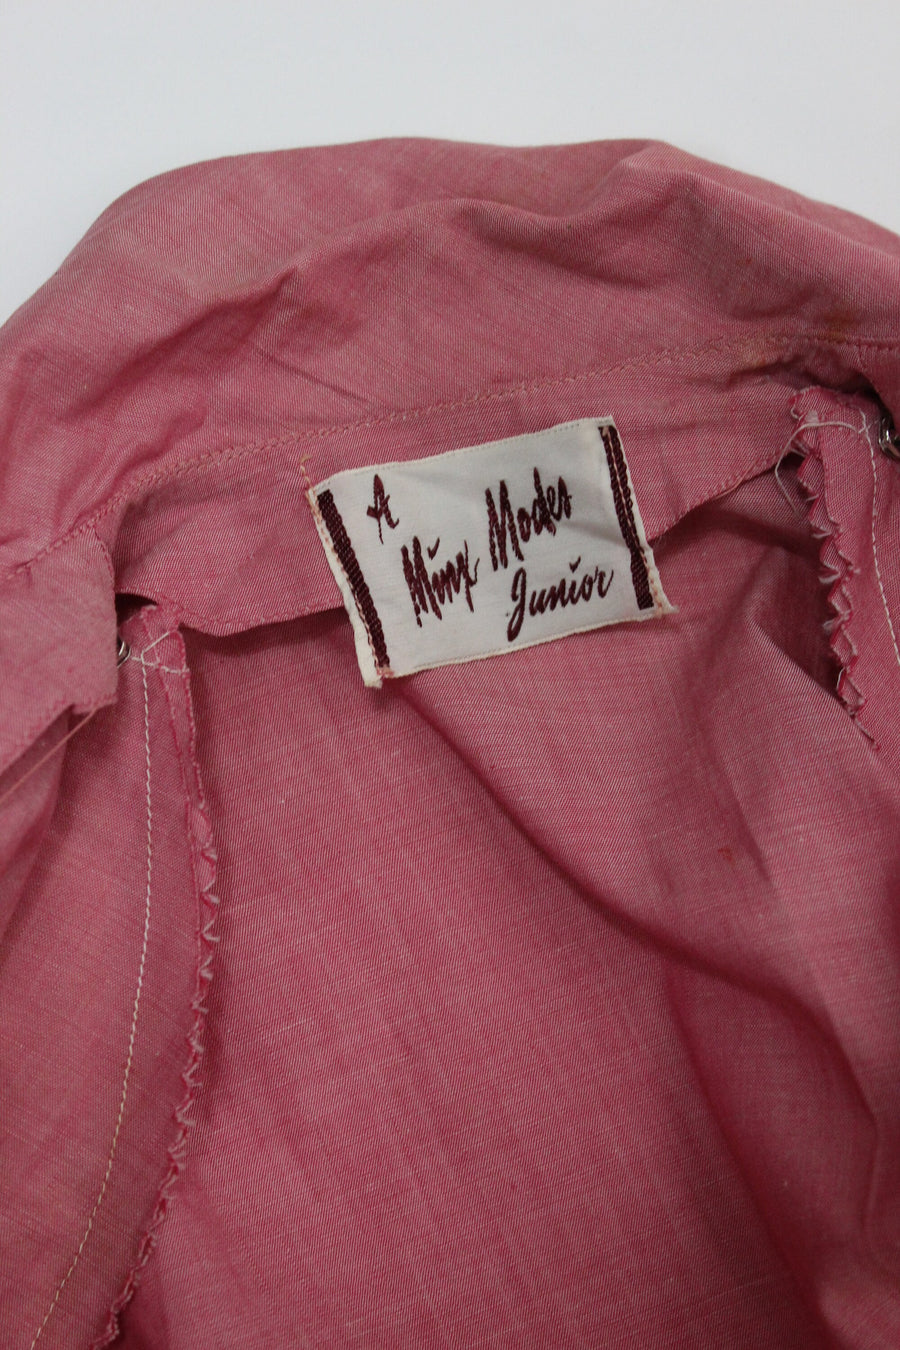 1950s MINX MODES two piece cotton suit SET xs | new spring summer